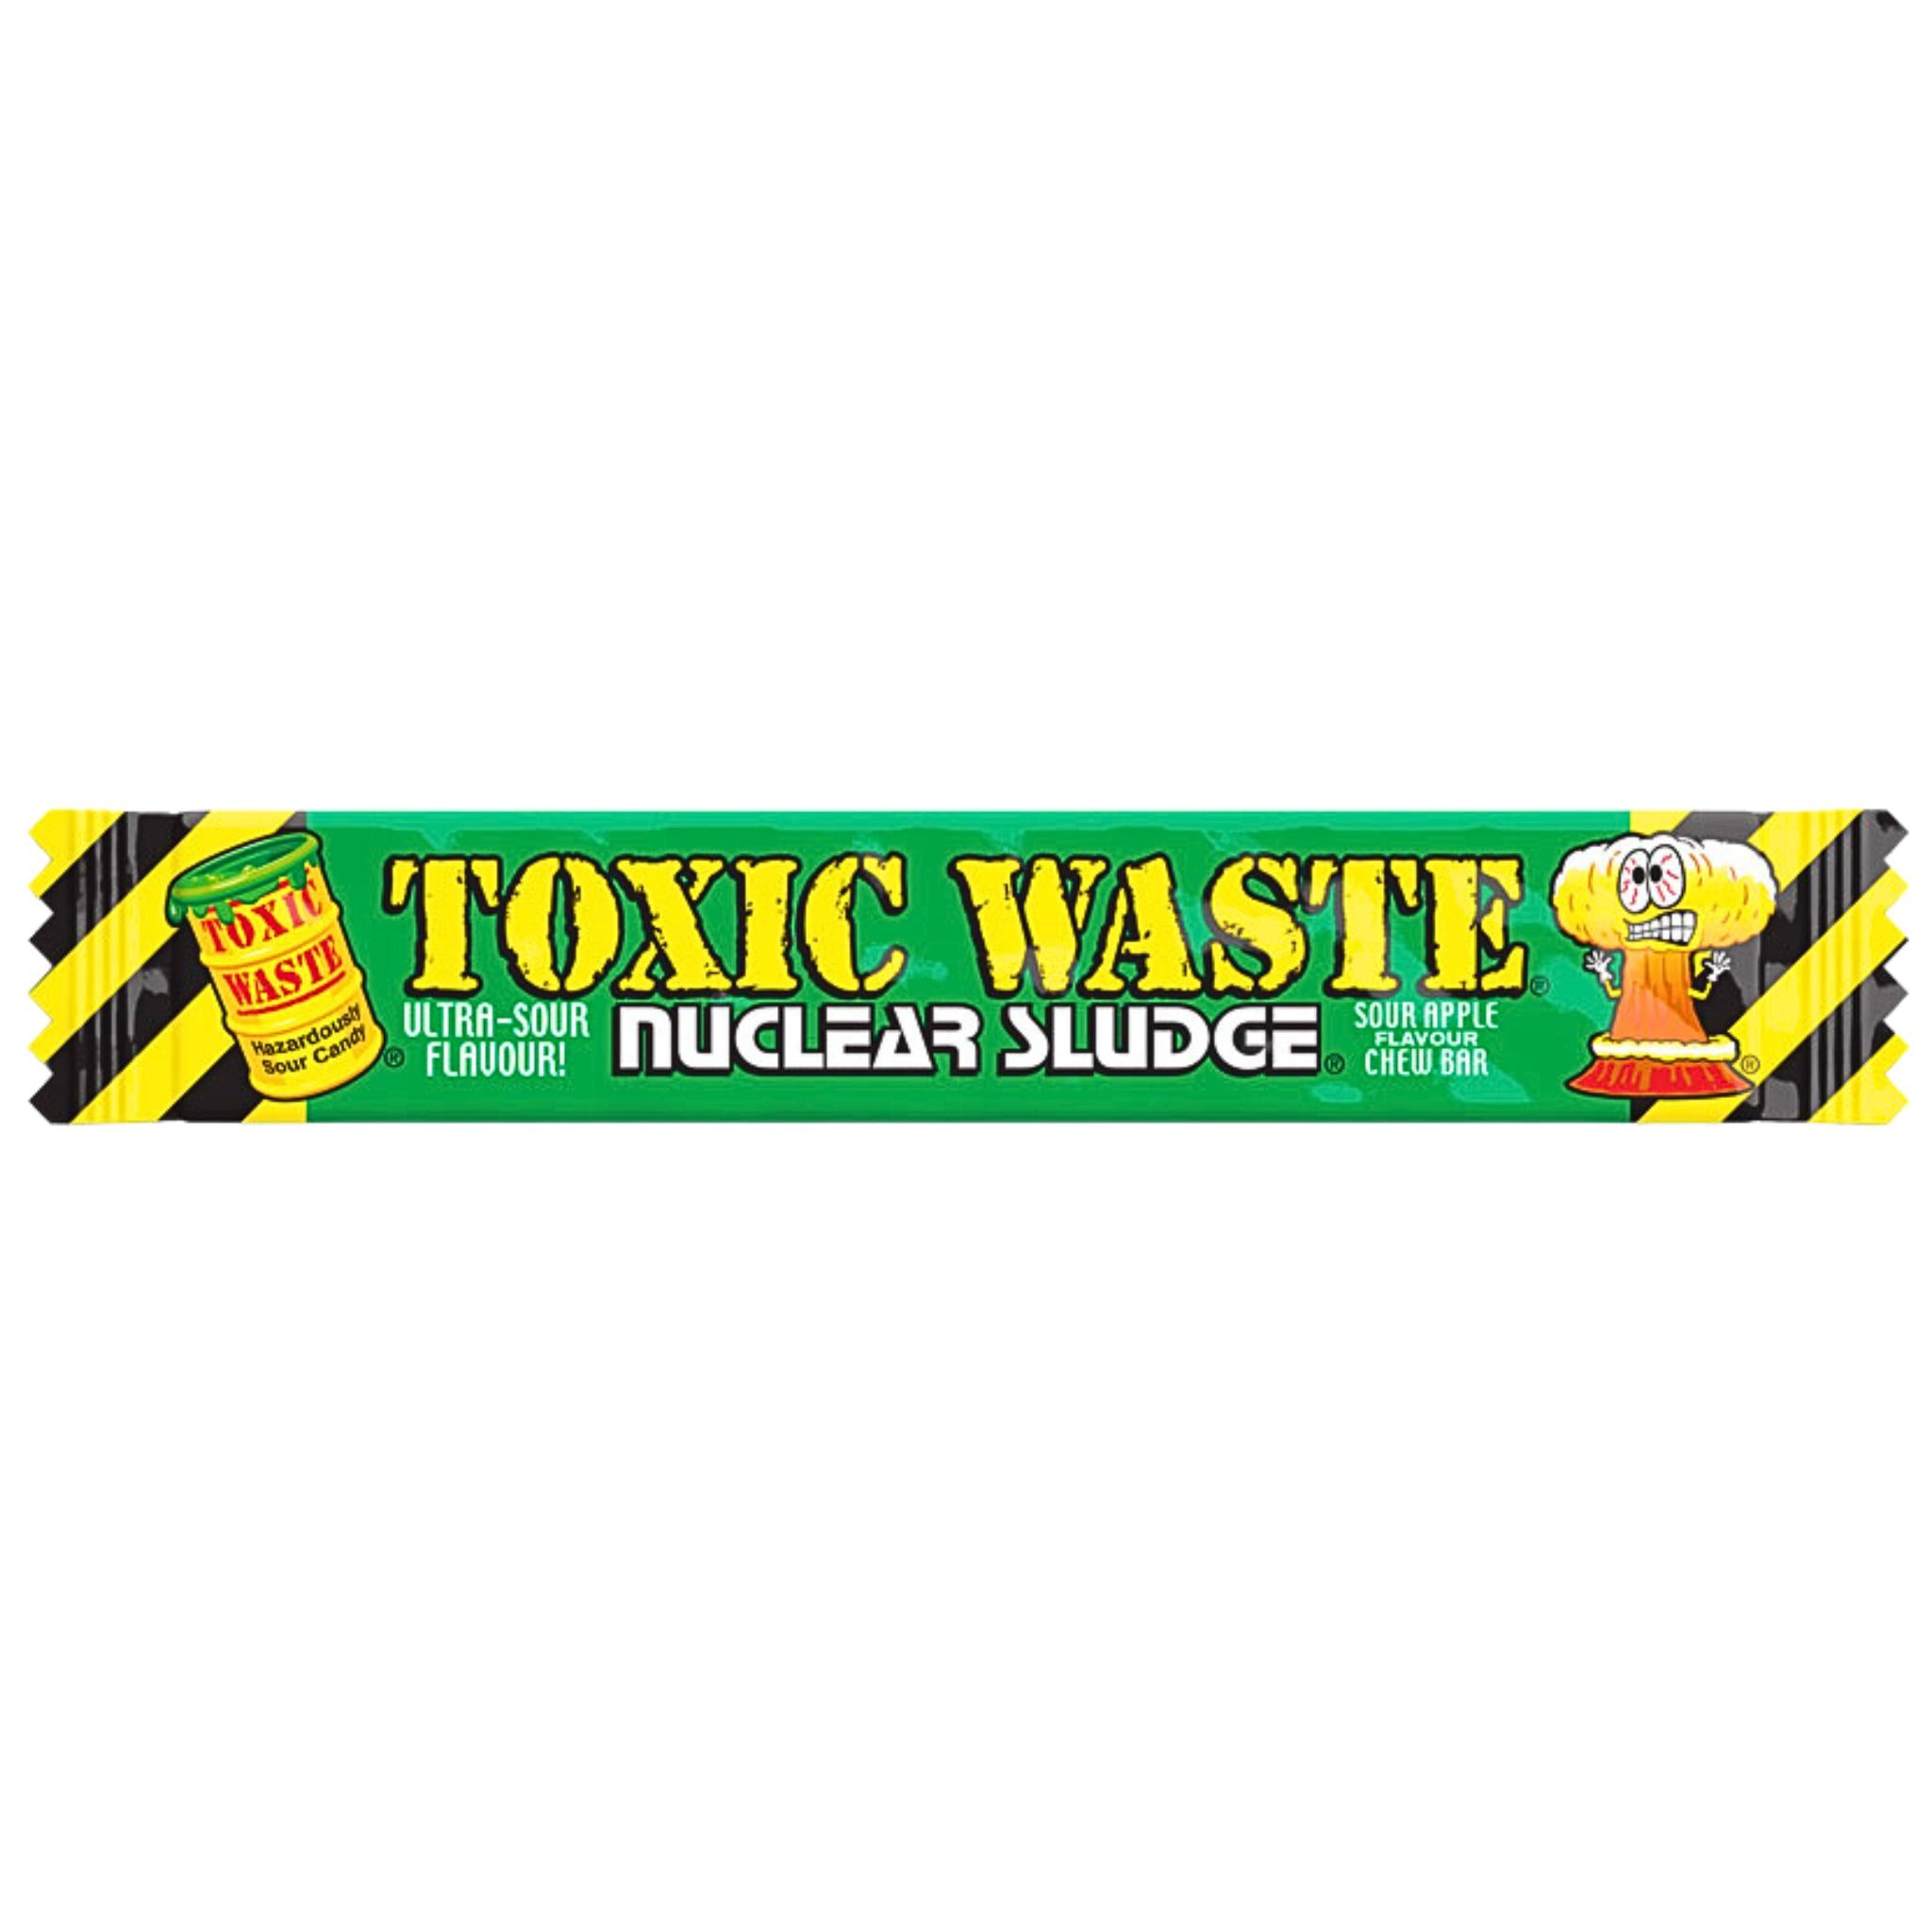 Toxic Waste Nuclear Sludge Sour Apple Chew Bar - 20g